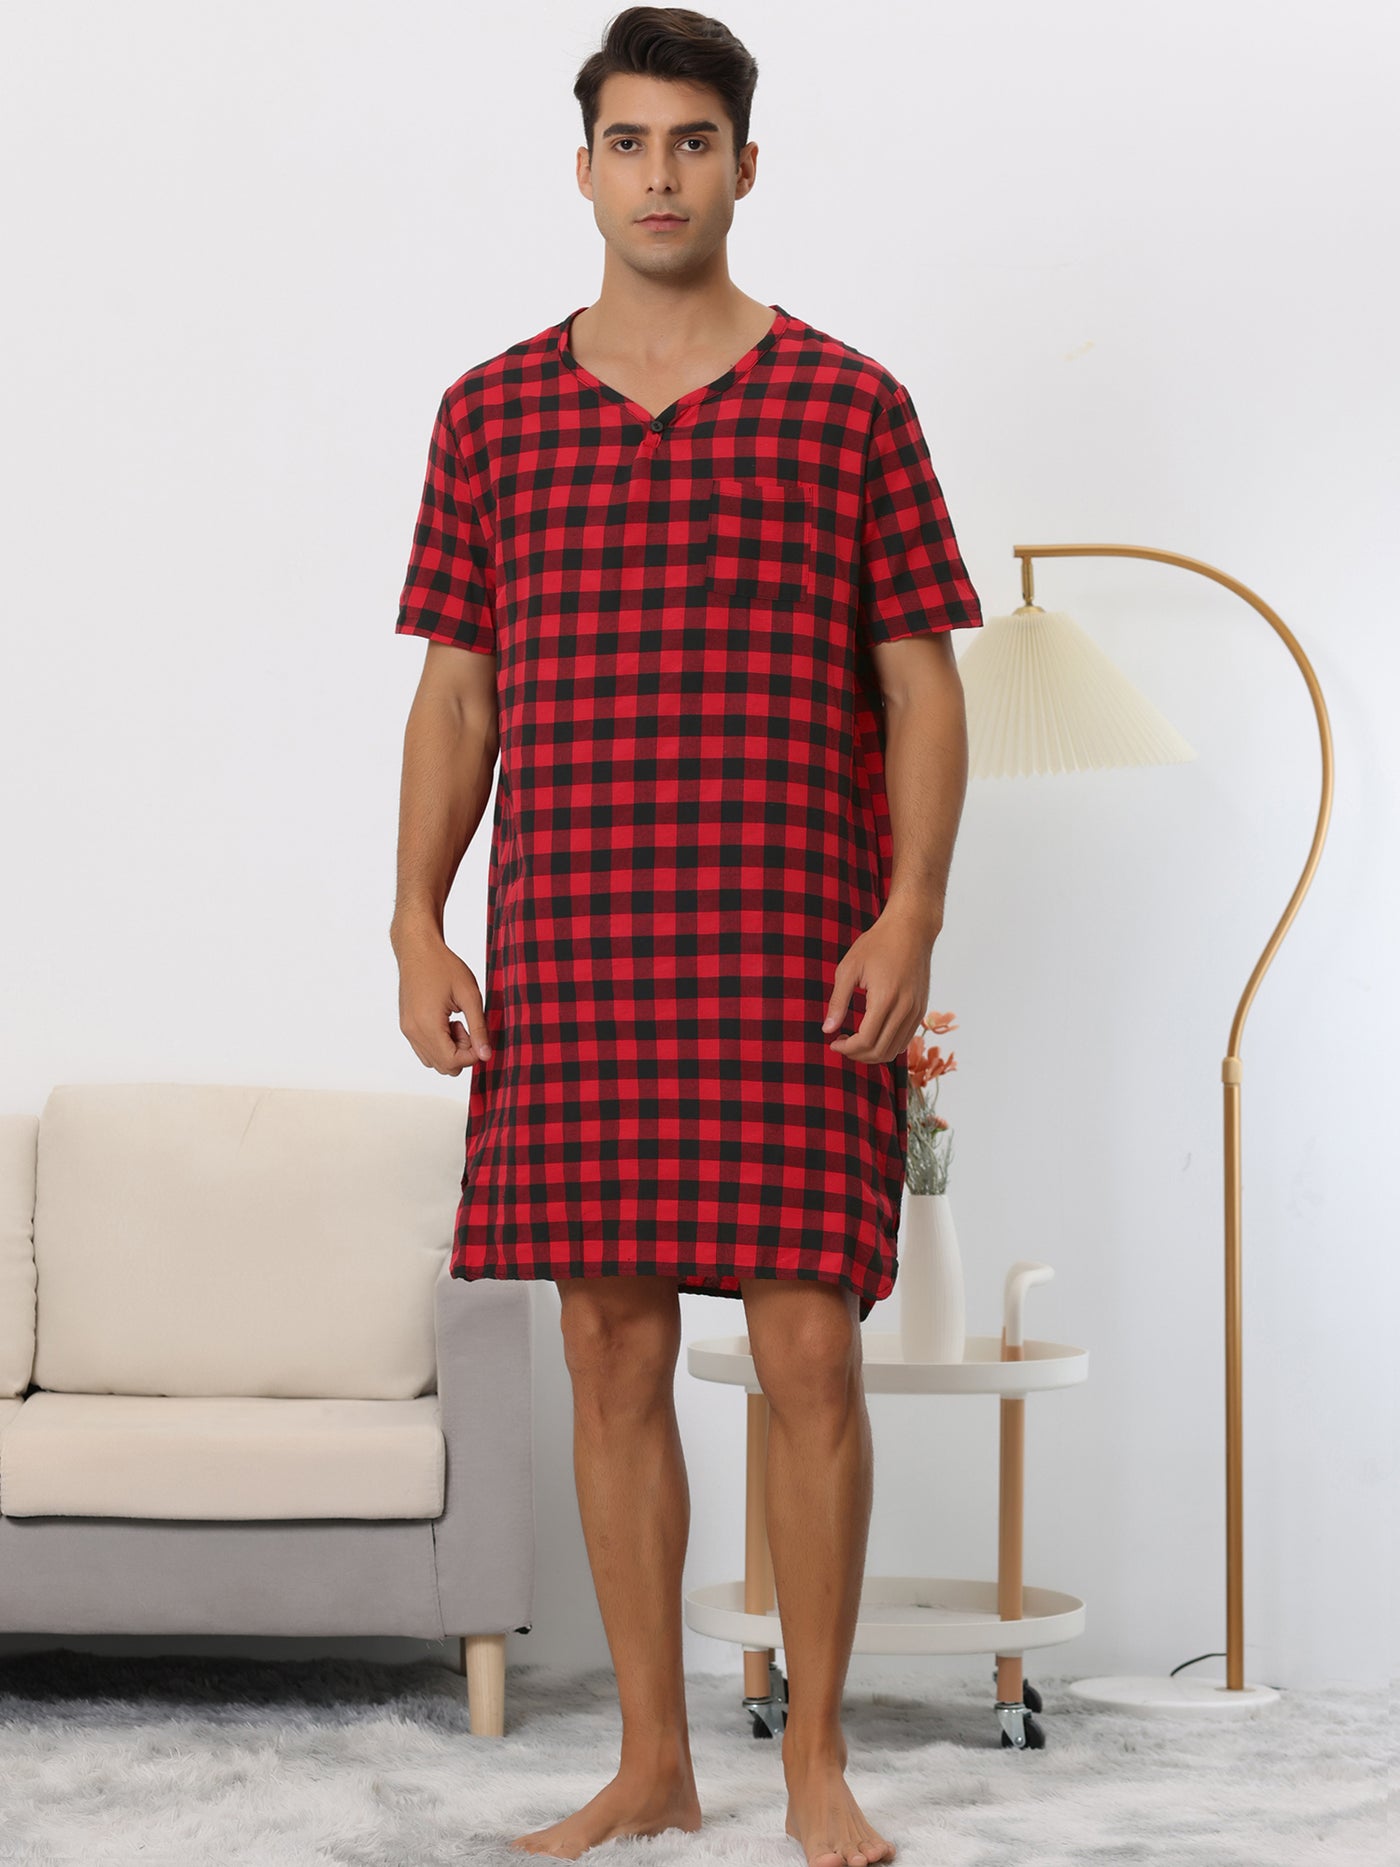 Bublédon Tartan Gingham Nightshirt for Men's V-Neck Short Sleeves Sleepwear Plaid Checked Nightgown